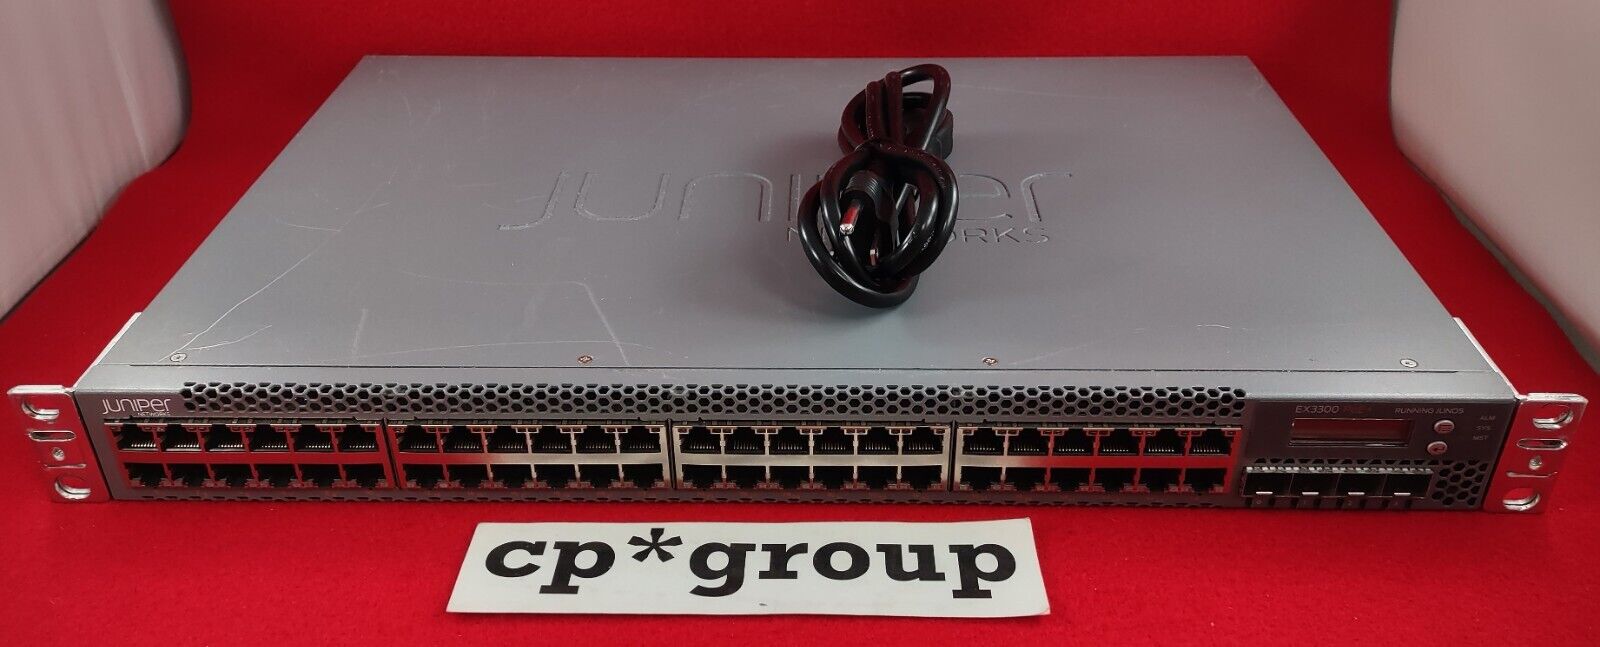 Juniper 48-Port GbE PoE+ & 4-Port 10GB SFP+ Managed Network Switch EX3300-48P